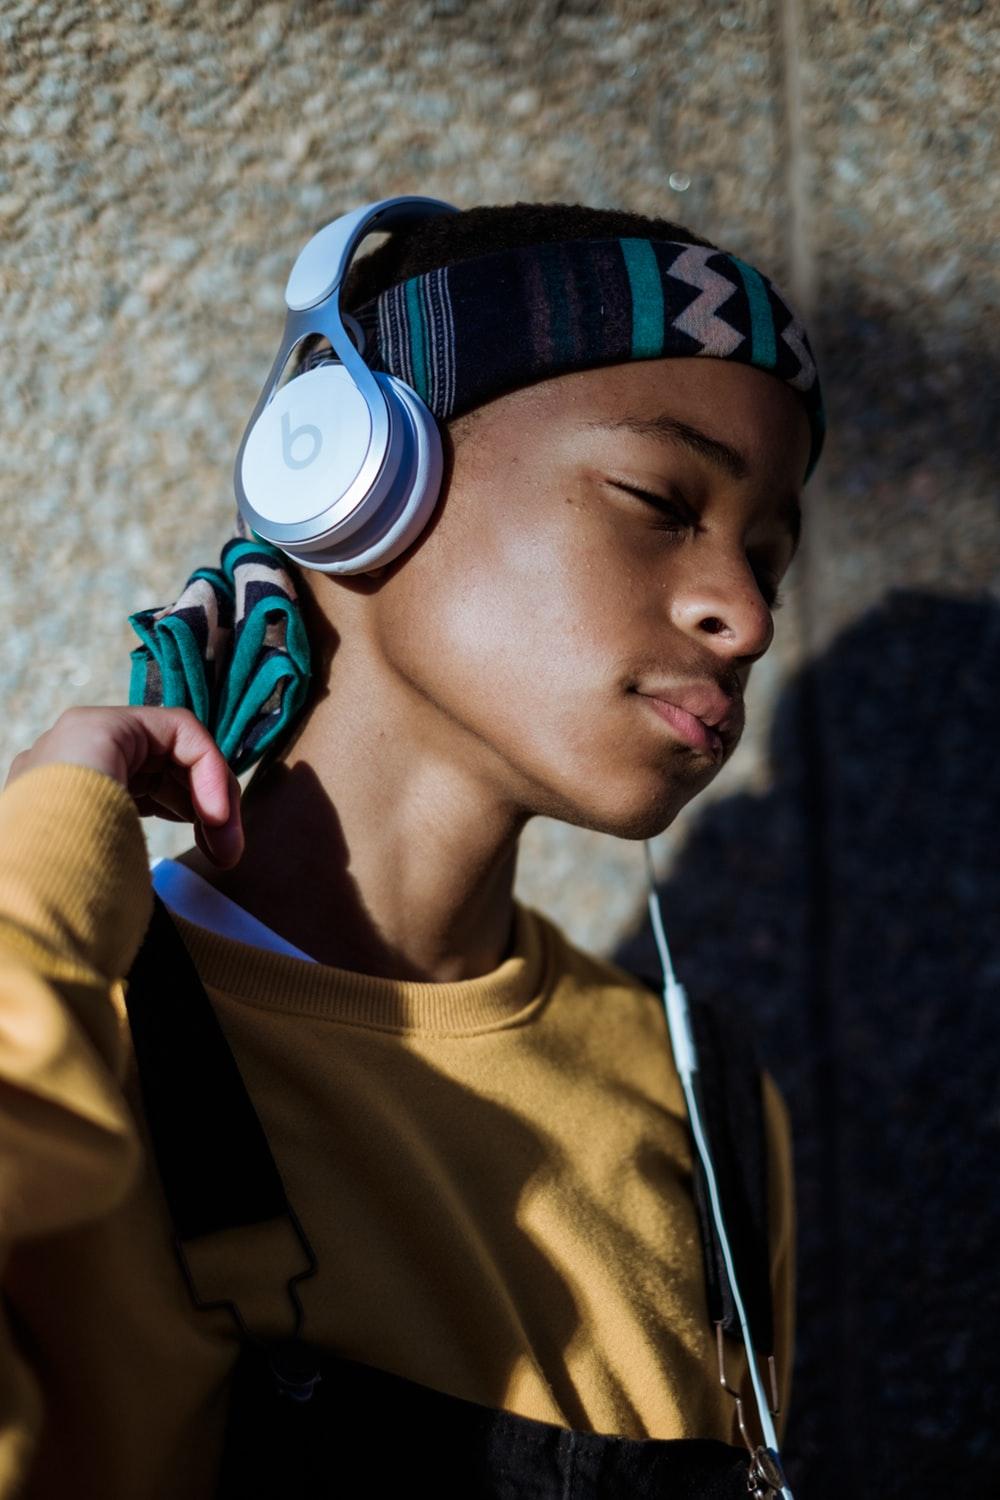 Boy Headphones Picture. Download Free Image